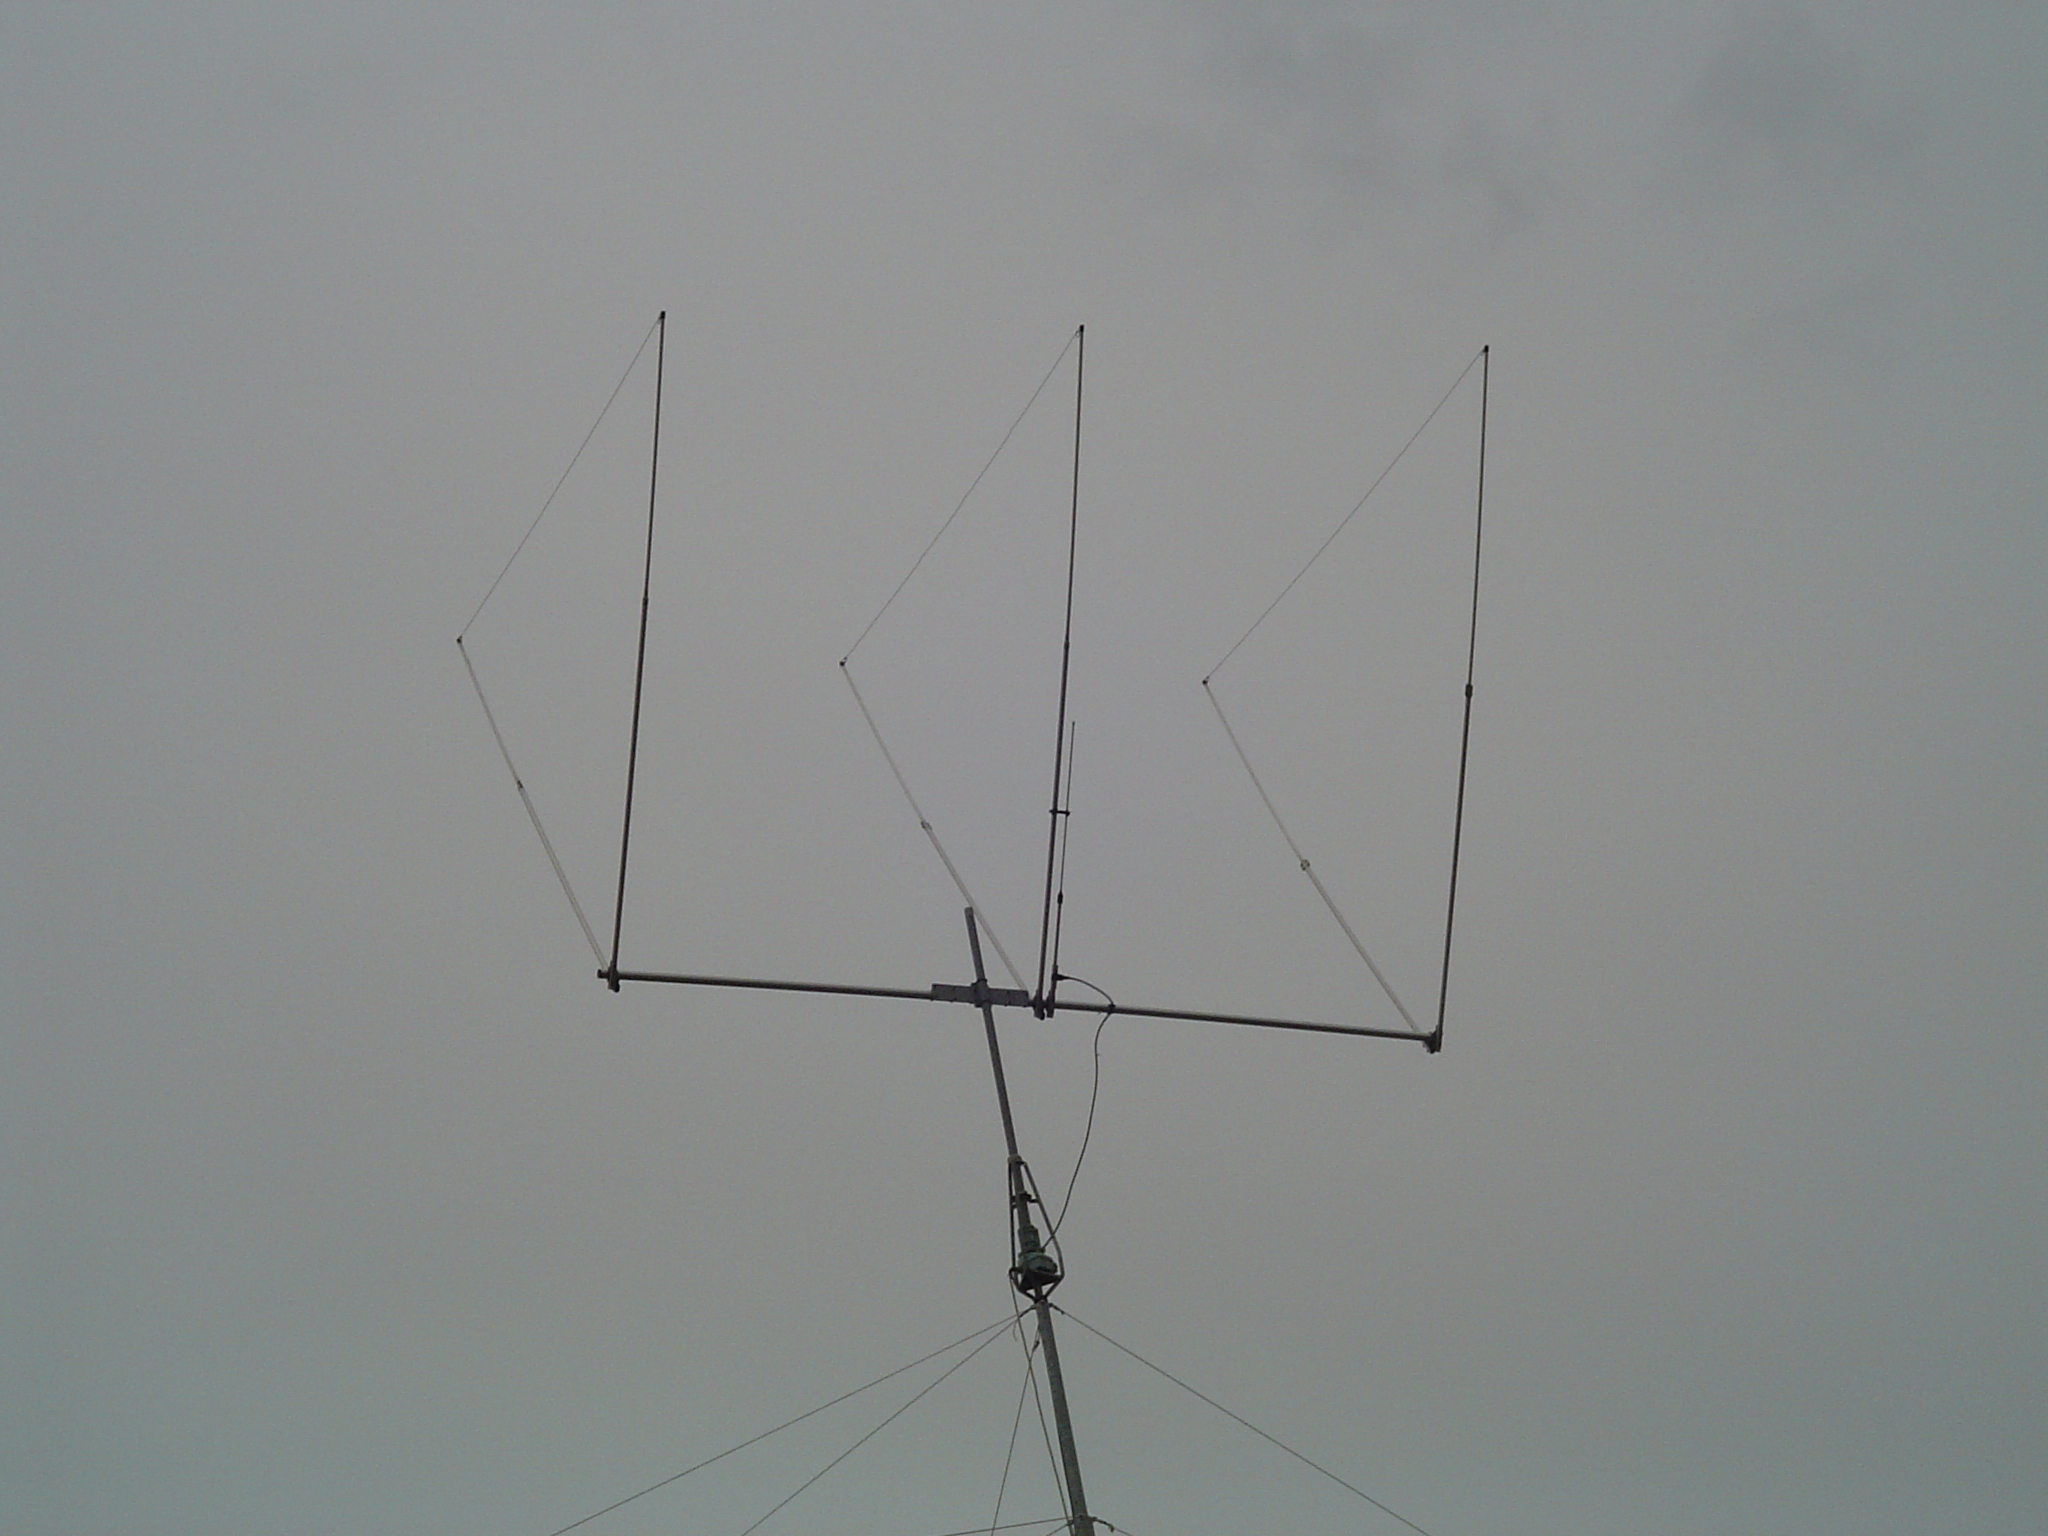 11 meter delta loop antenna design height versus take off angle. 